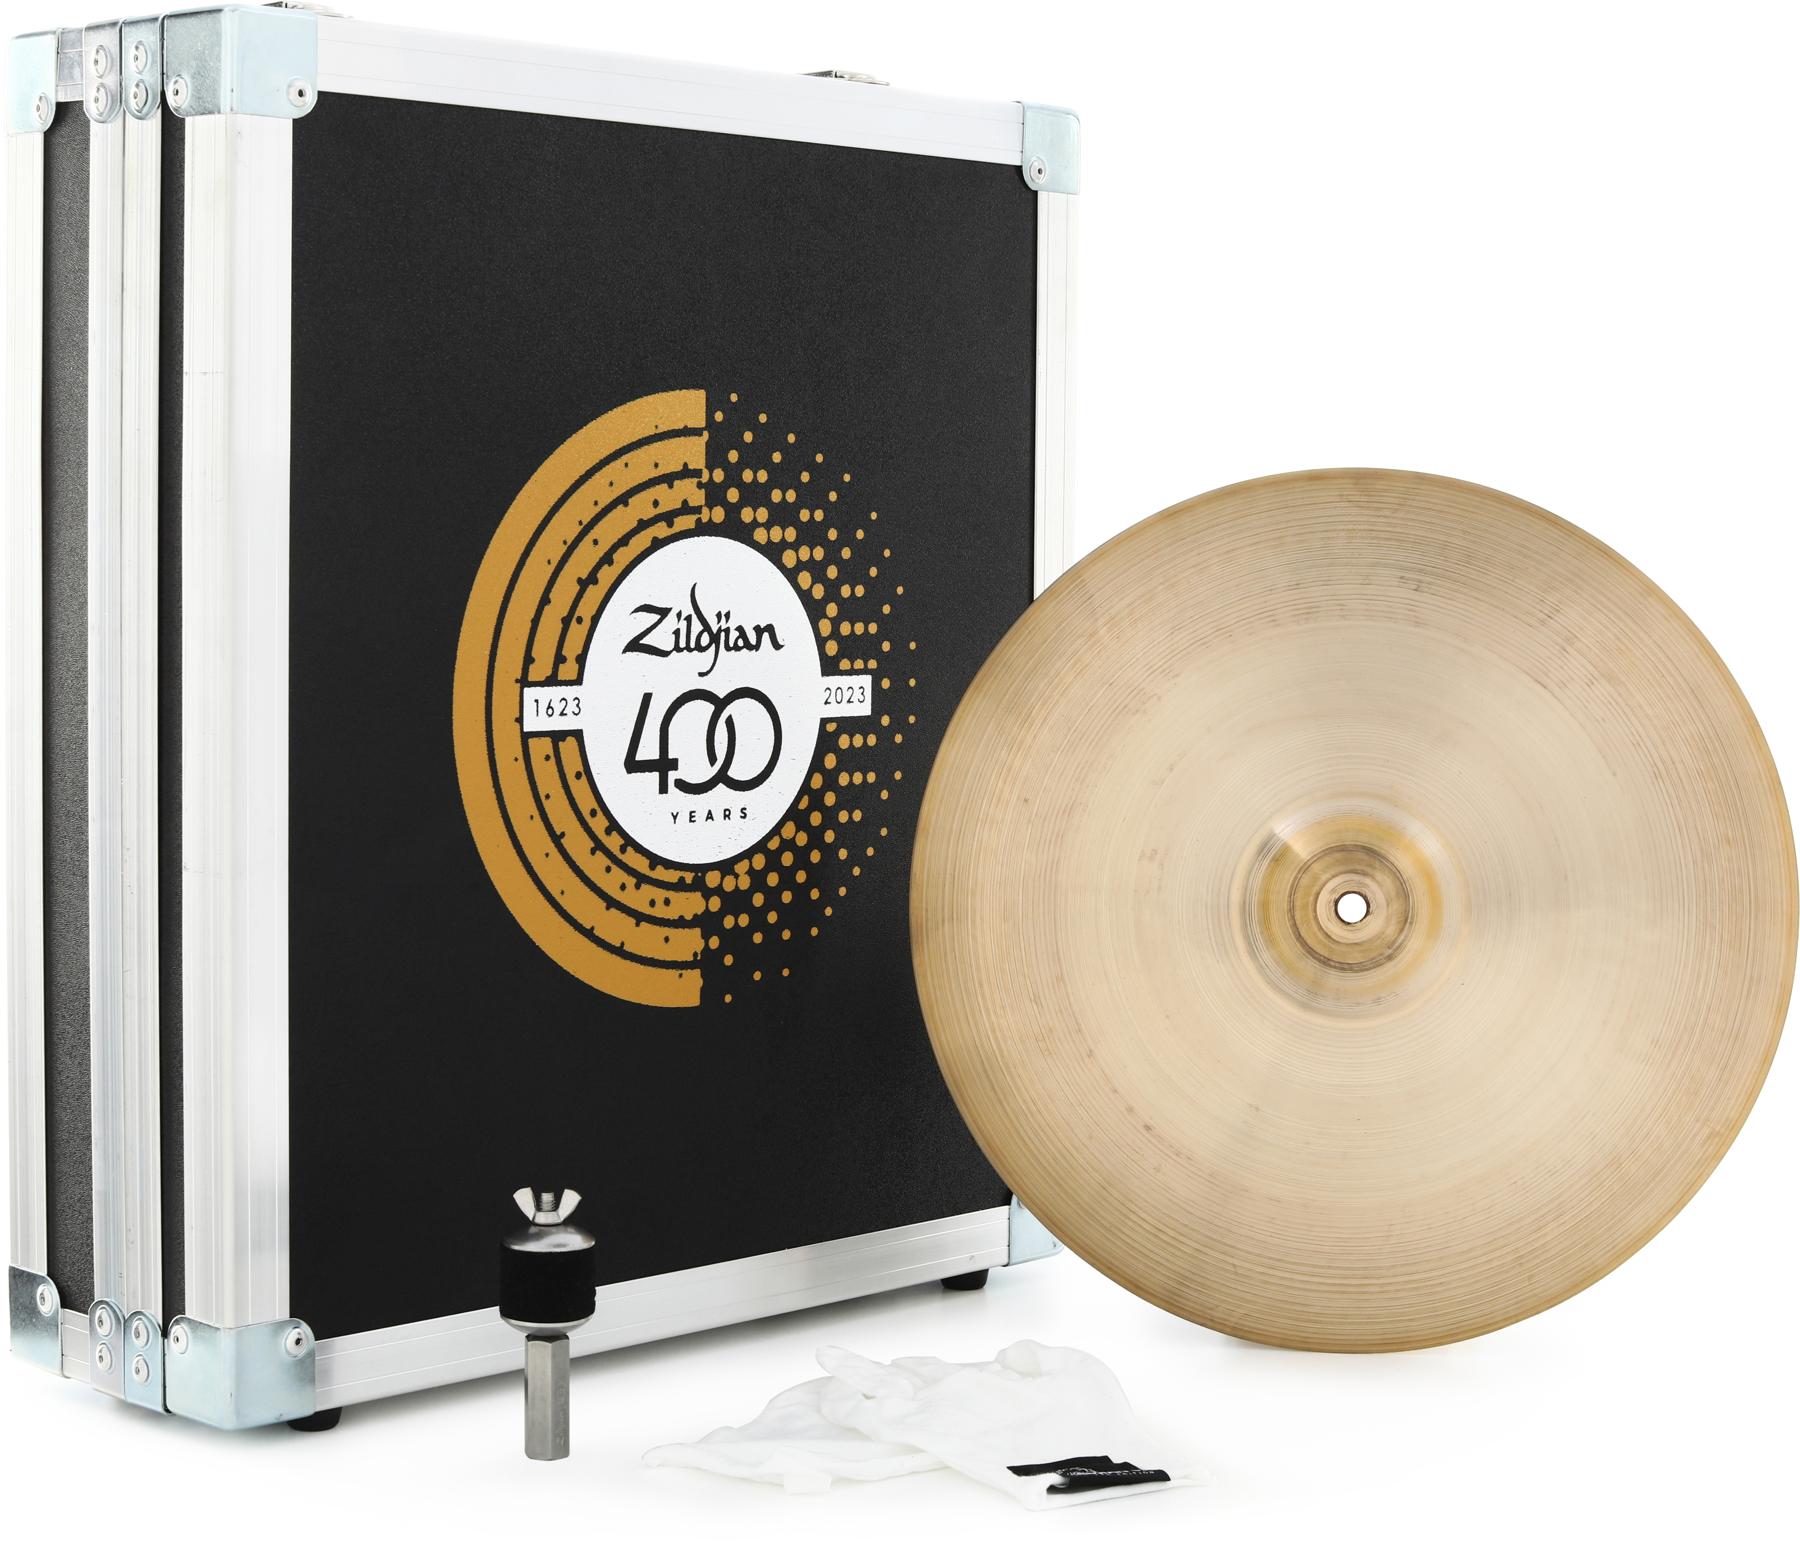 Zildjian Limited-edition 400th Anniversary Vault Crash Cymbal - 15 inch